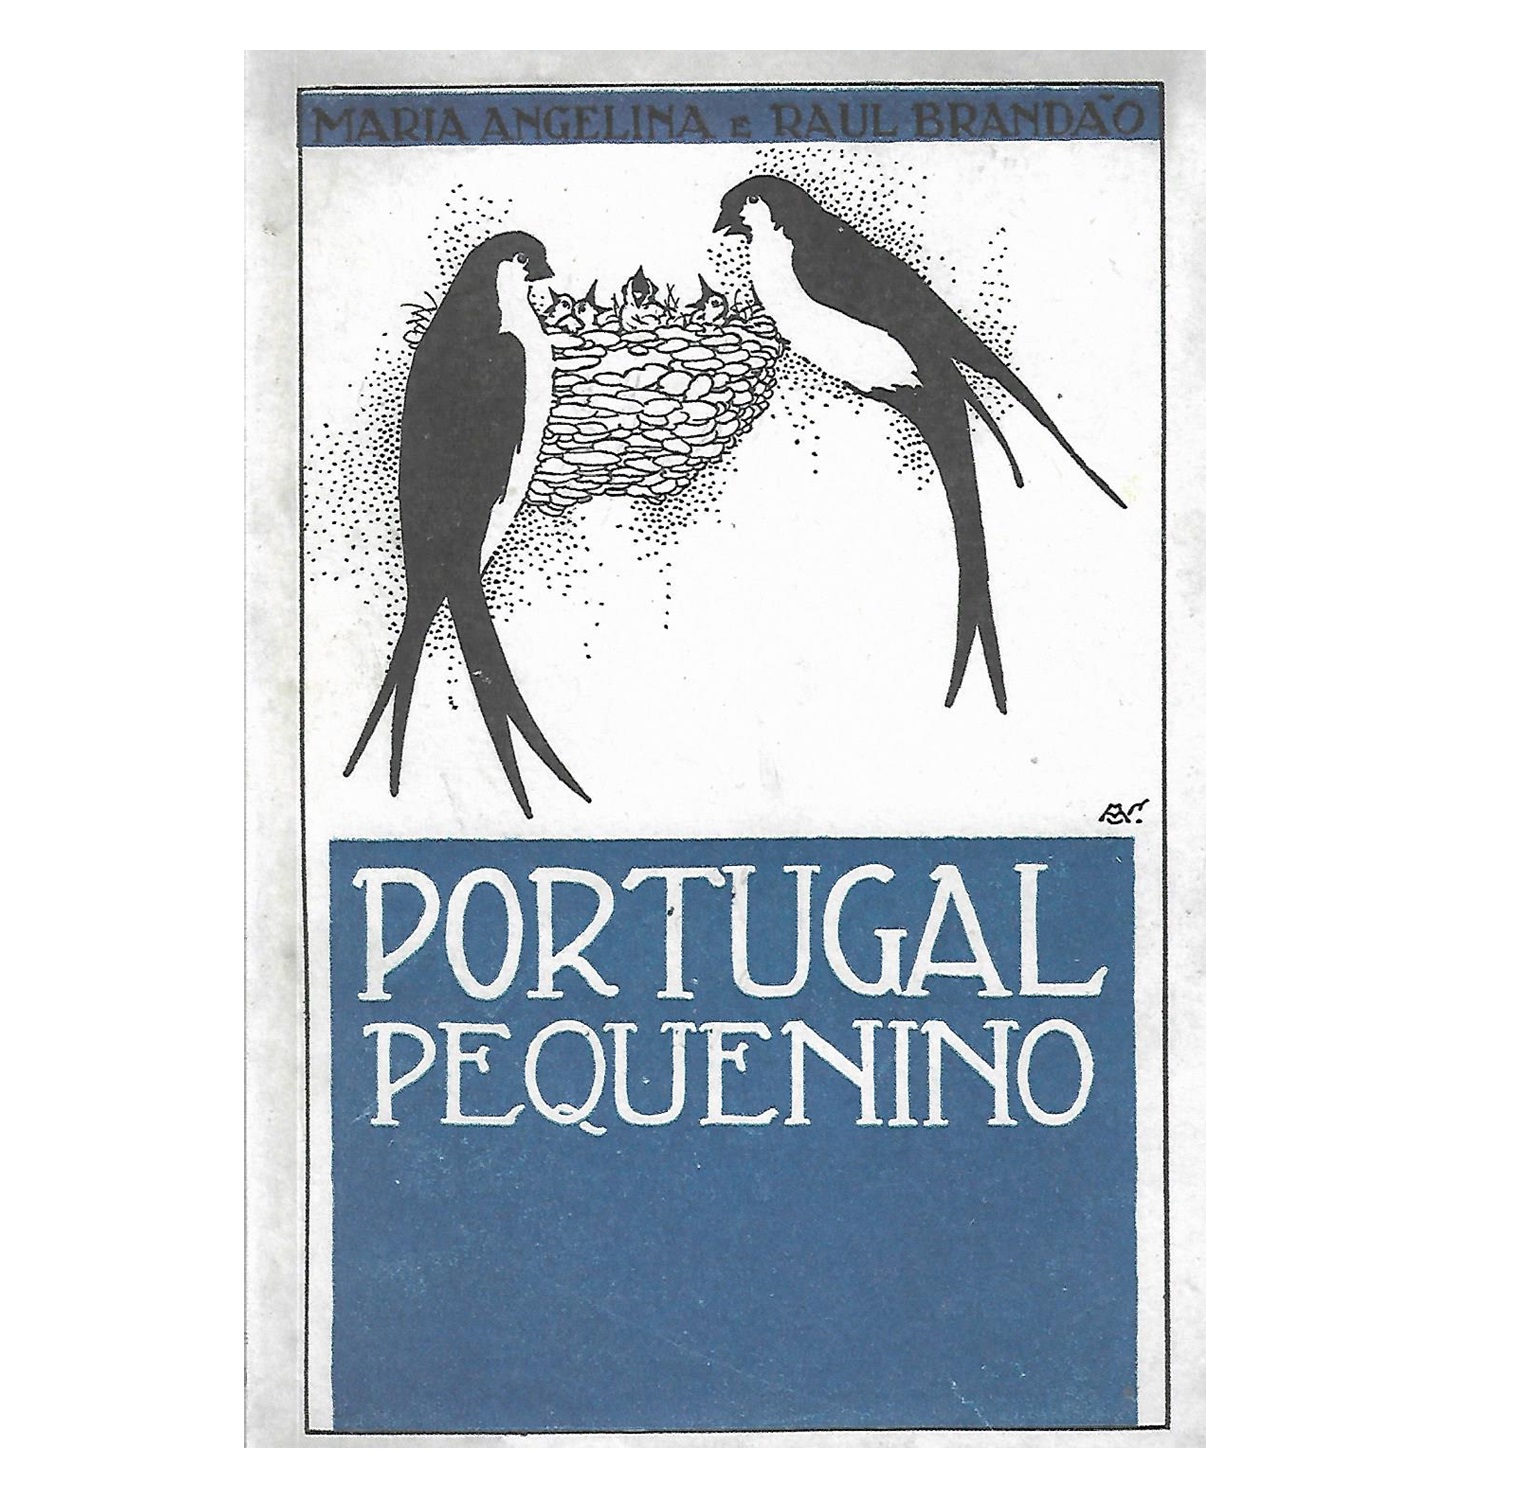 PORTUGAL PEQUENINO